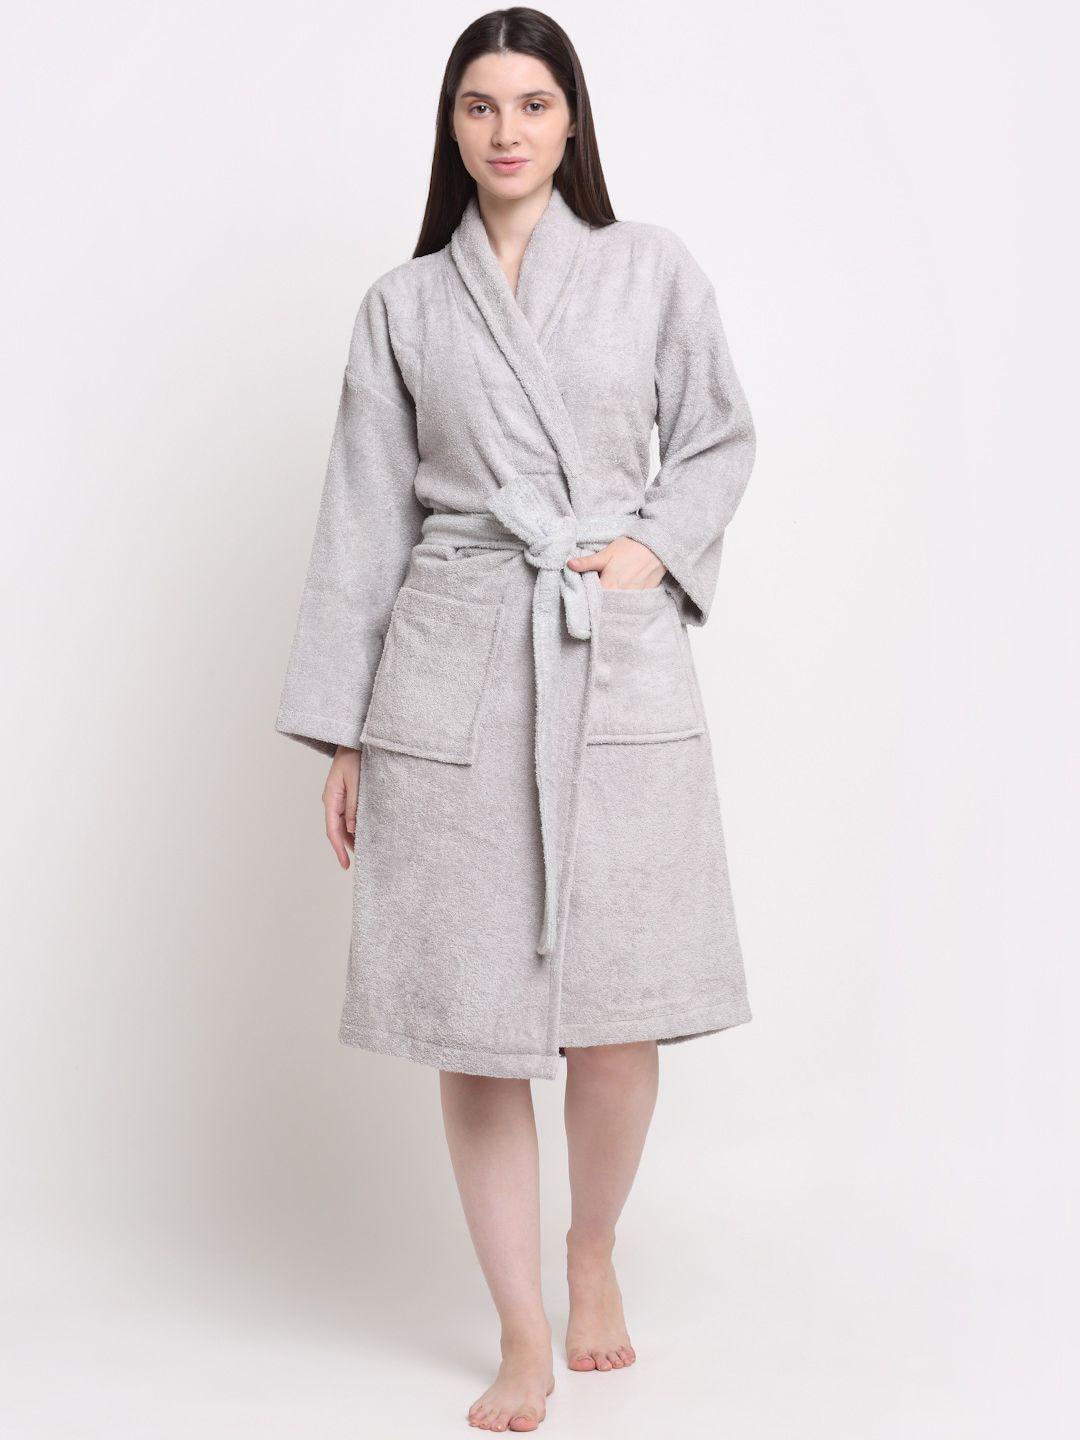 creeva silver bath robe with pockets